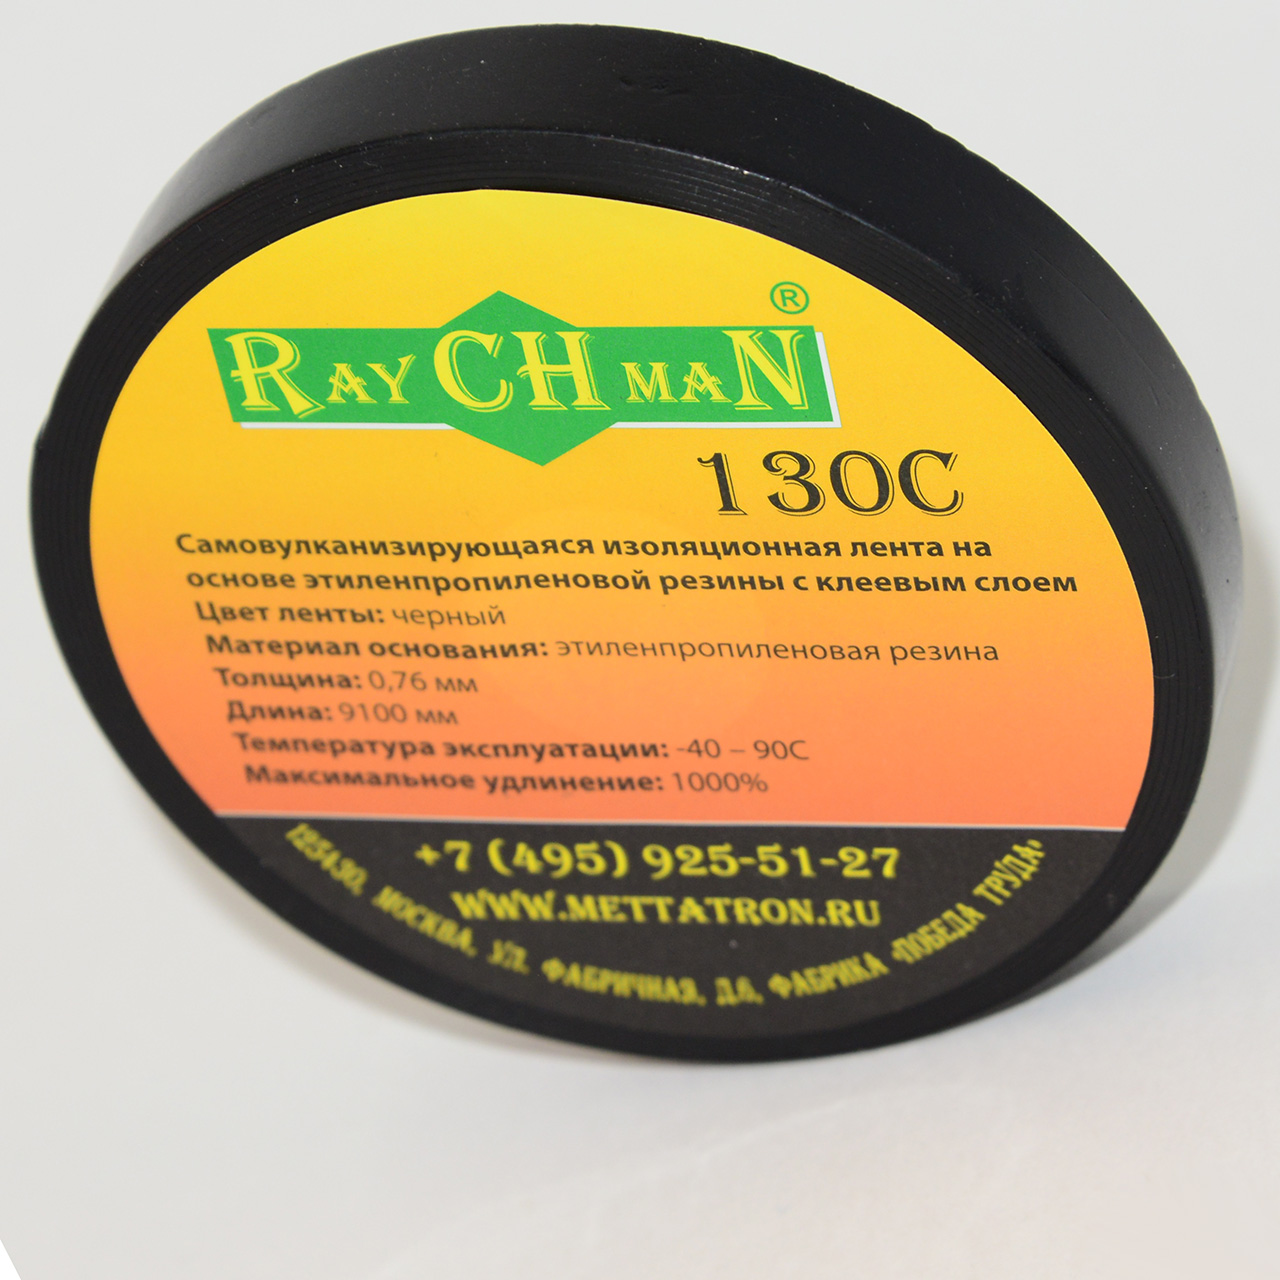 Raychman ® 130C